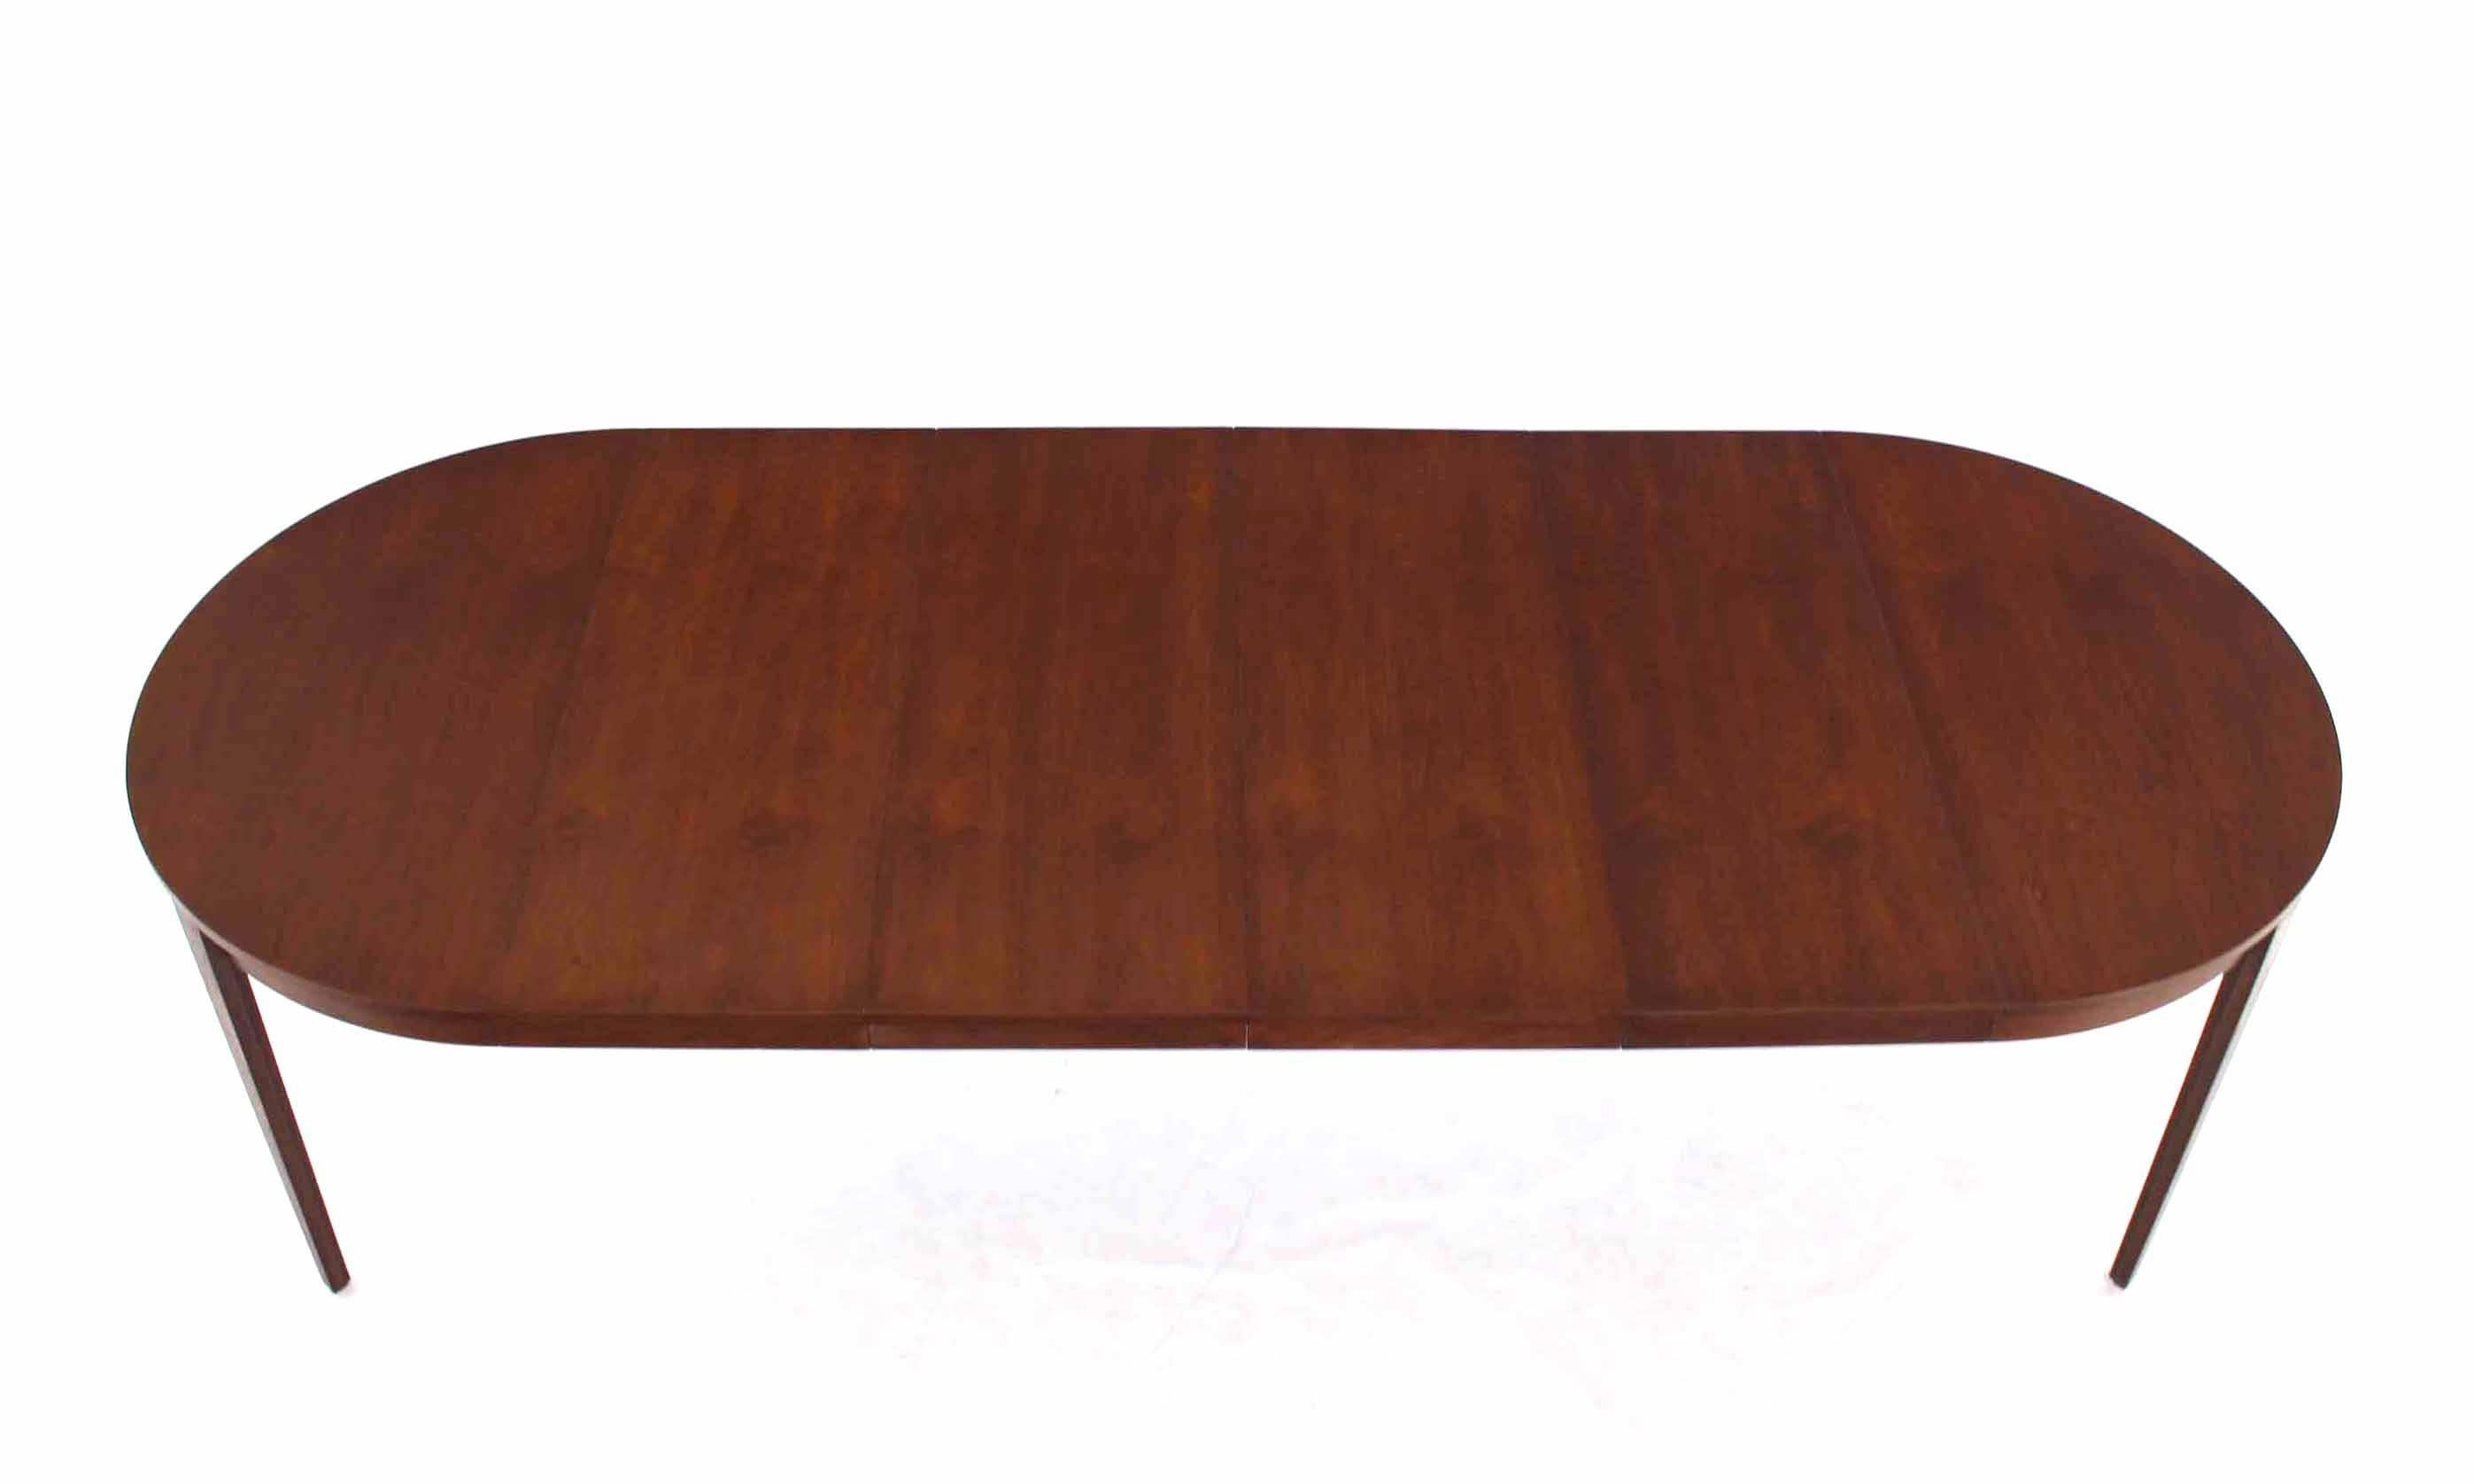 Mid-Century Modern walnut Dunbar table with 4x16 - leaves.